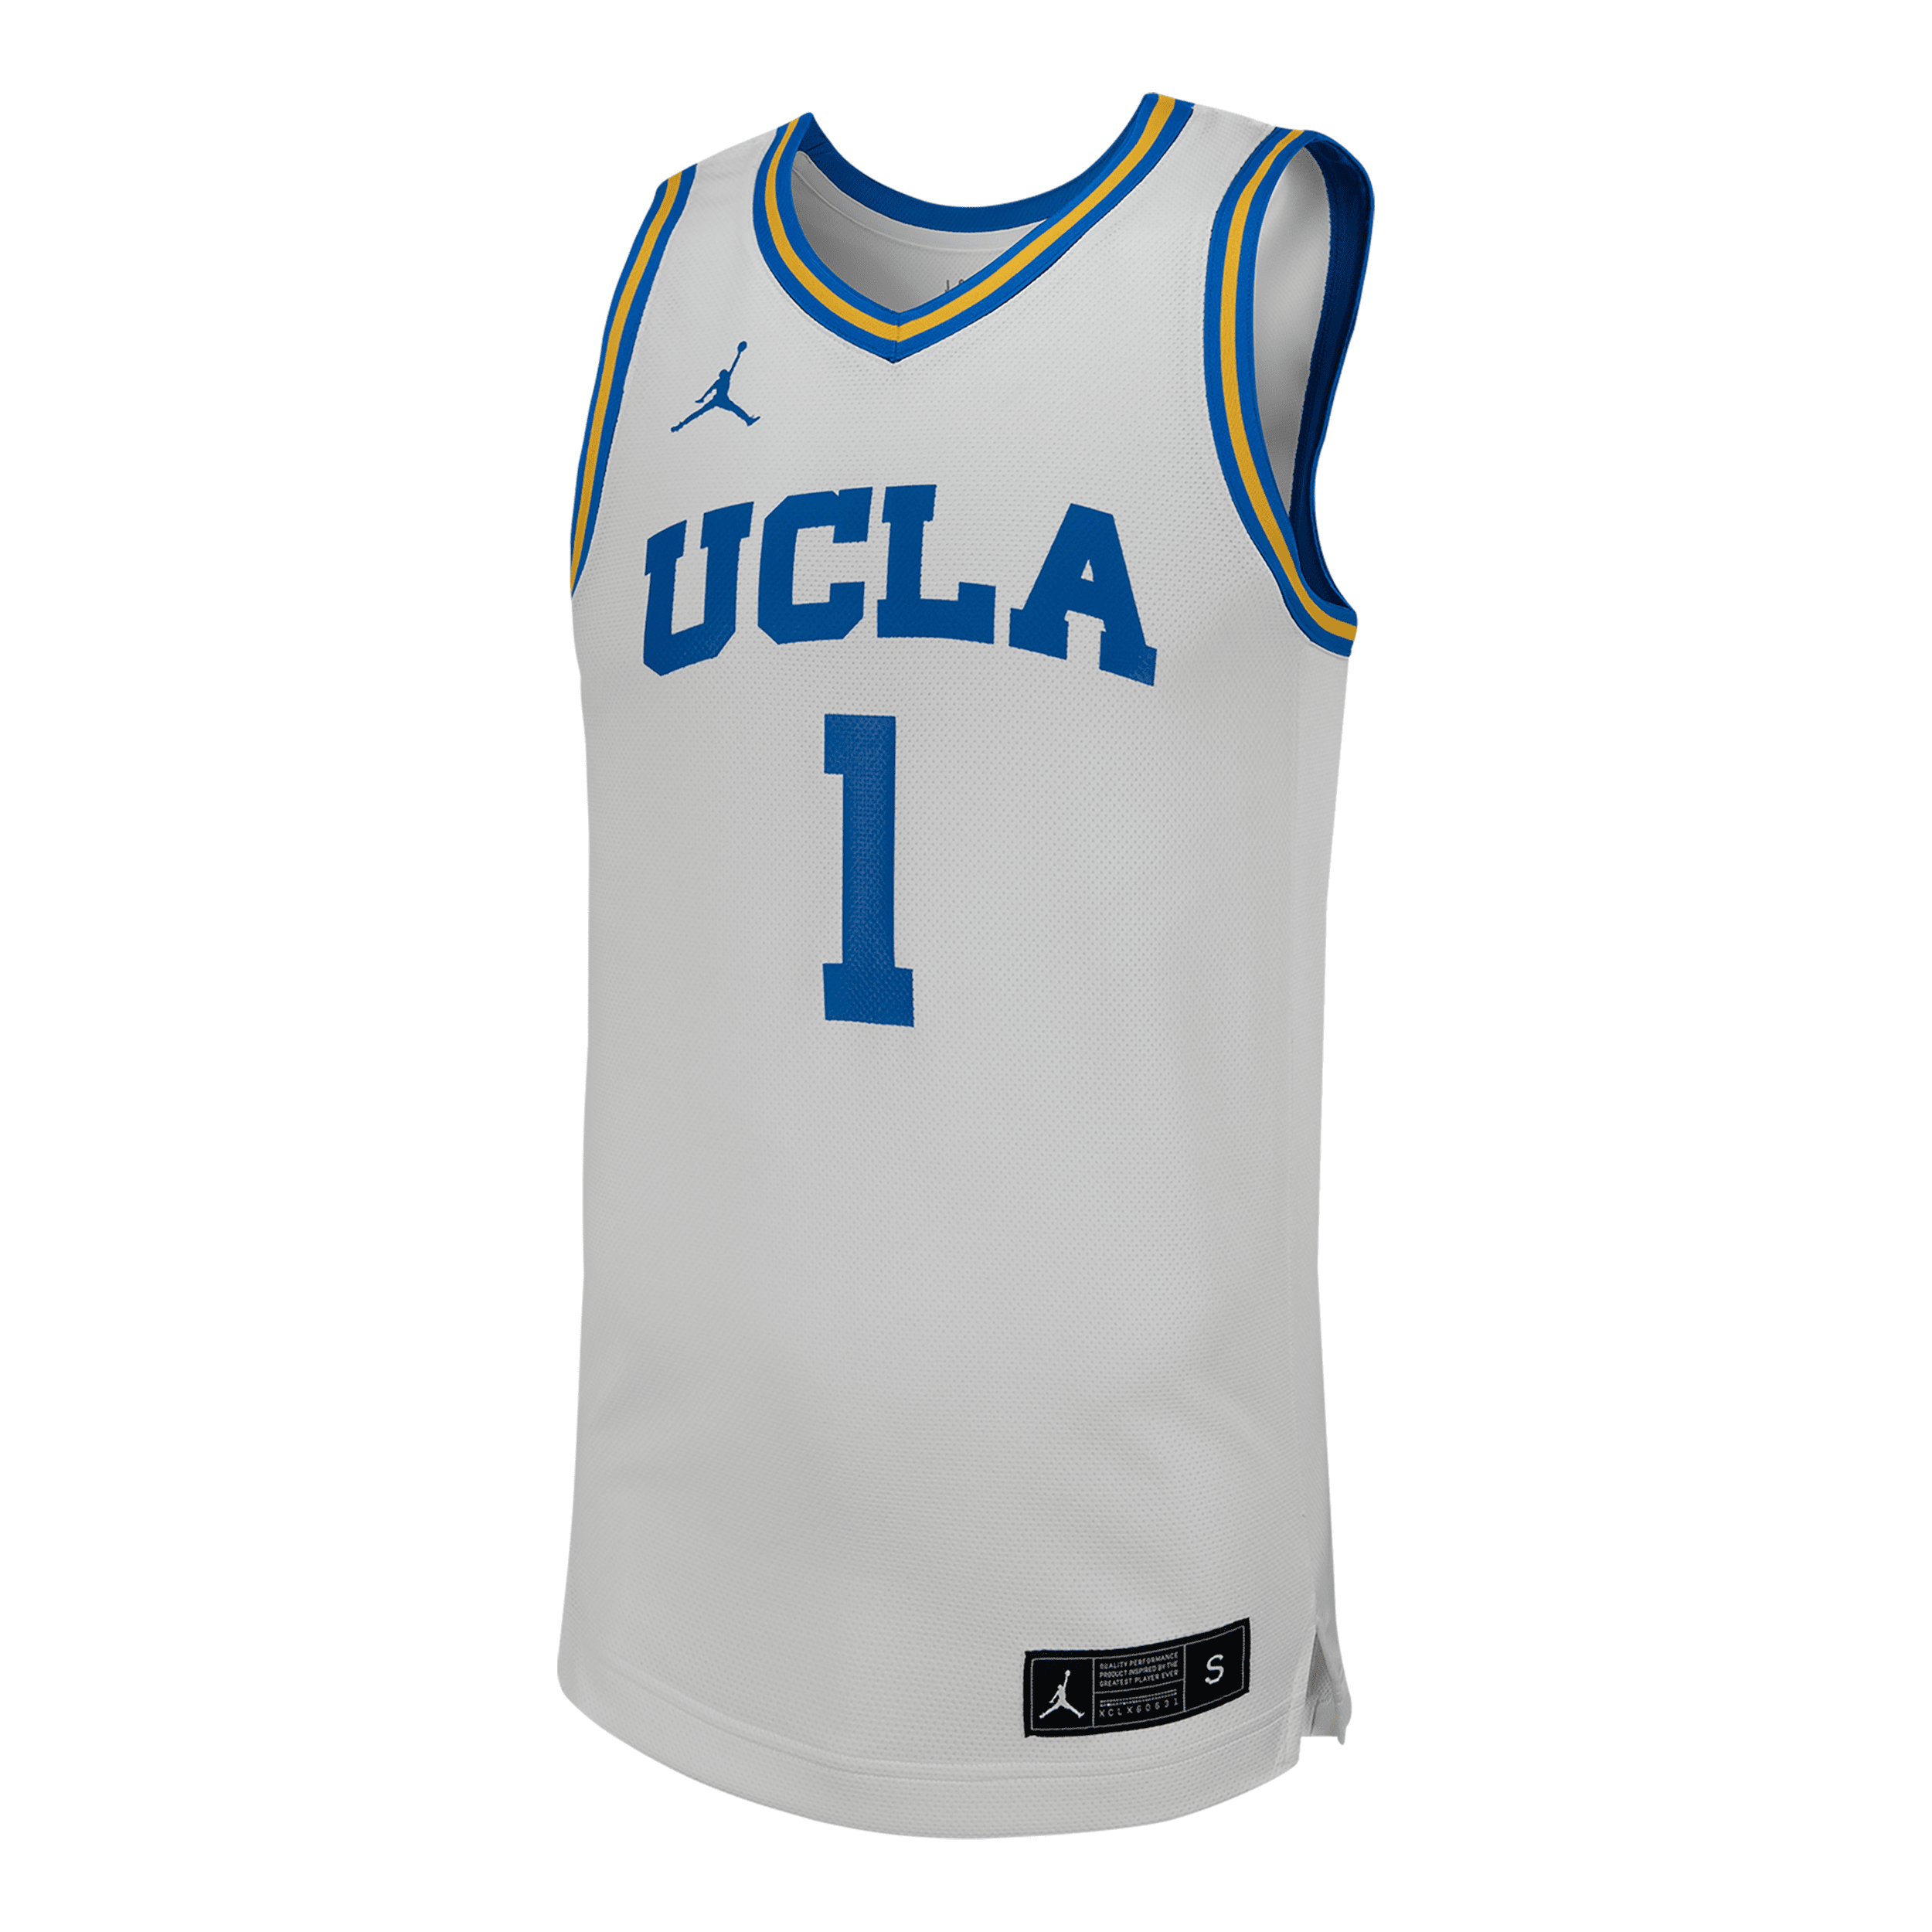 Nike Unisex Ucla Jordan College Basketball Replica Jersey In White